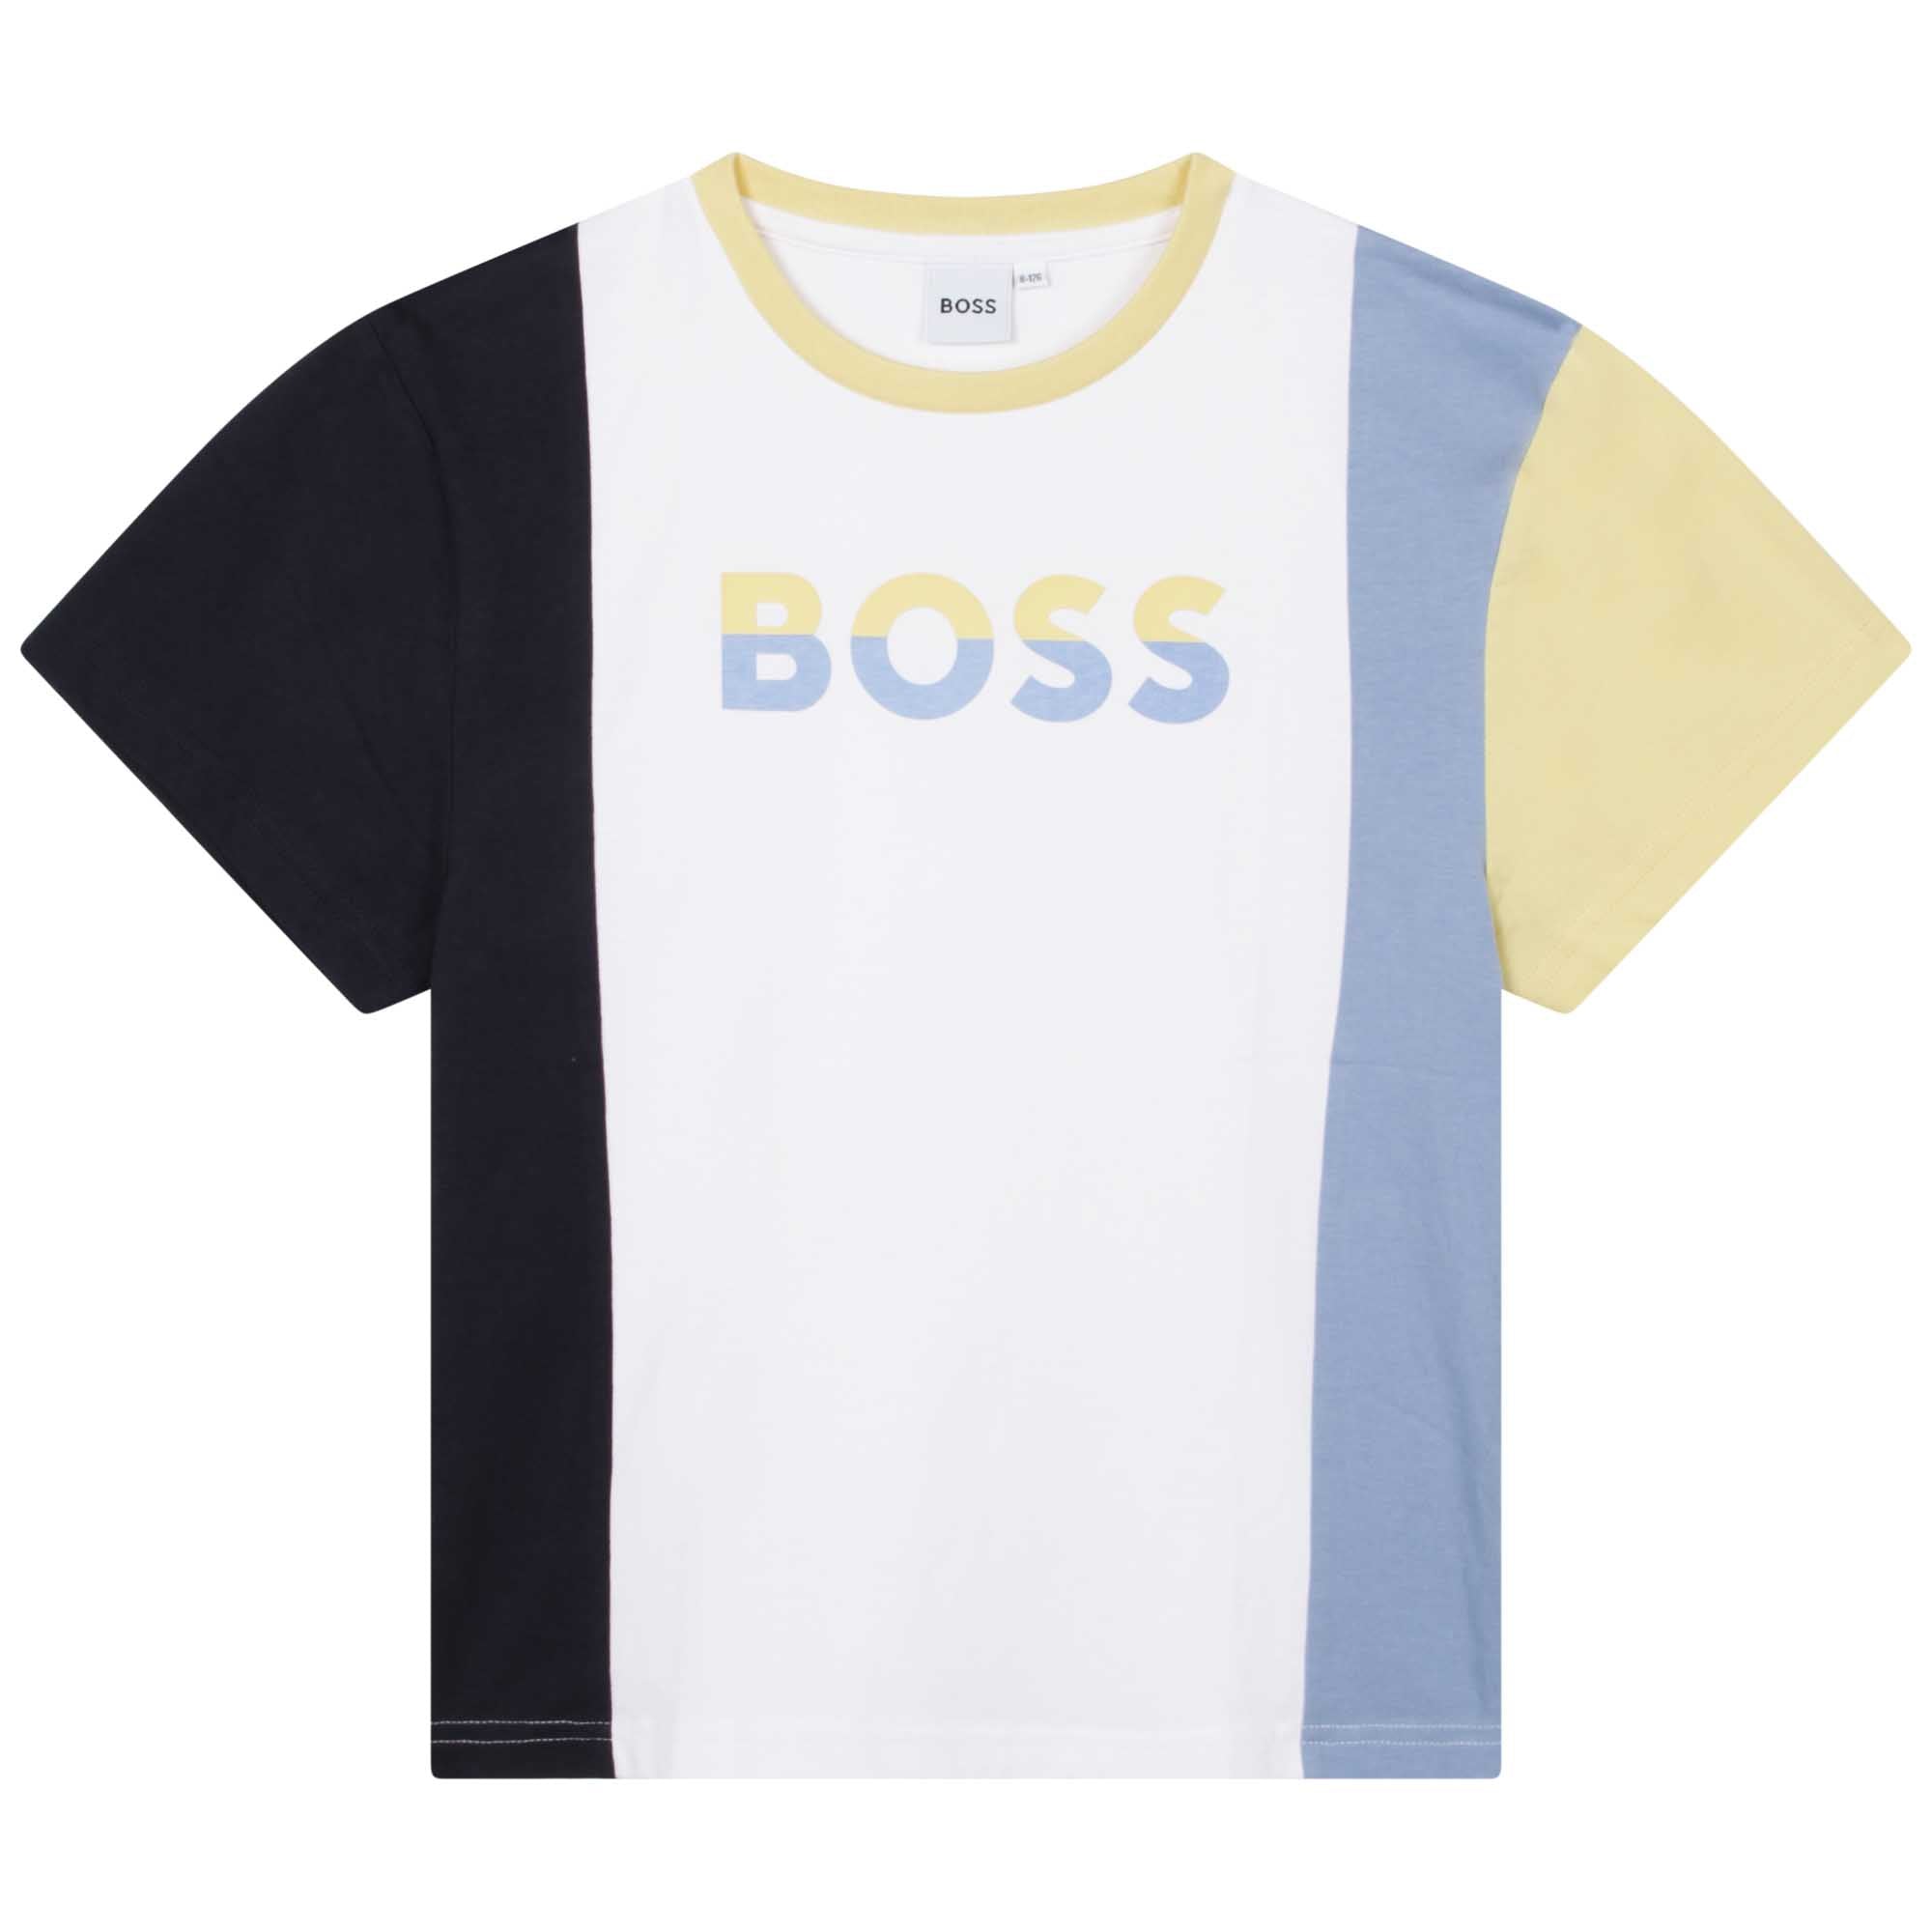 HUGO BOSS - Colour Block Tee-Shirt - Yellow